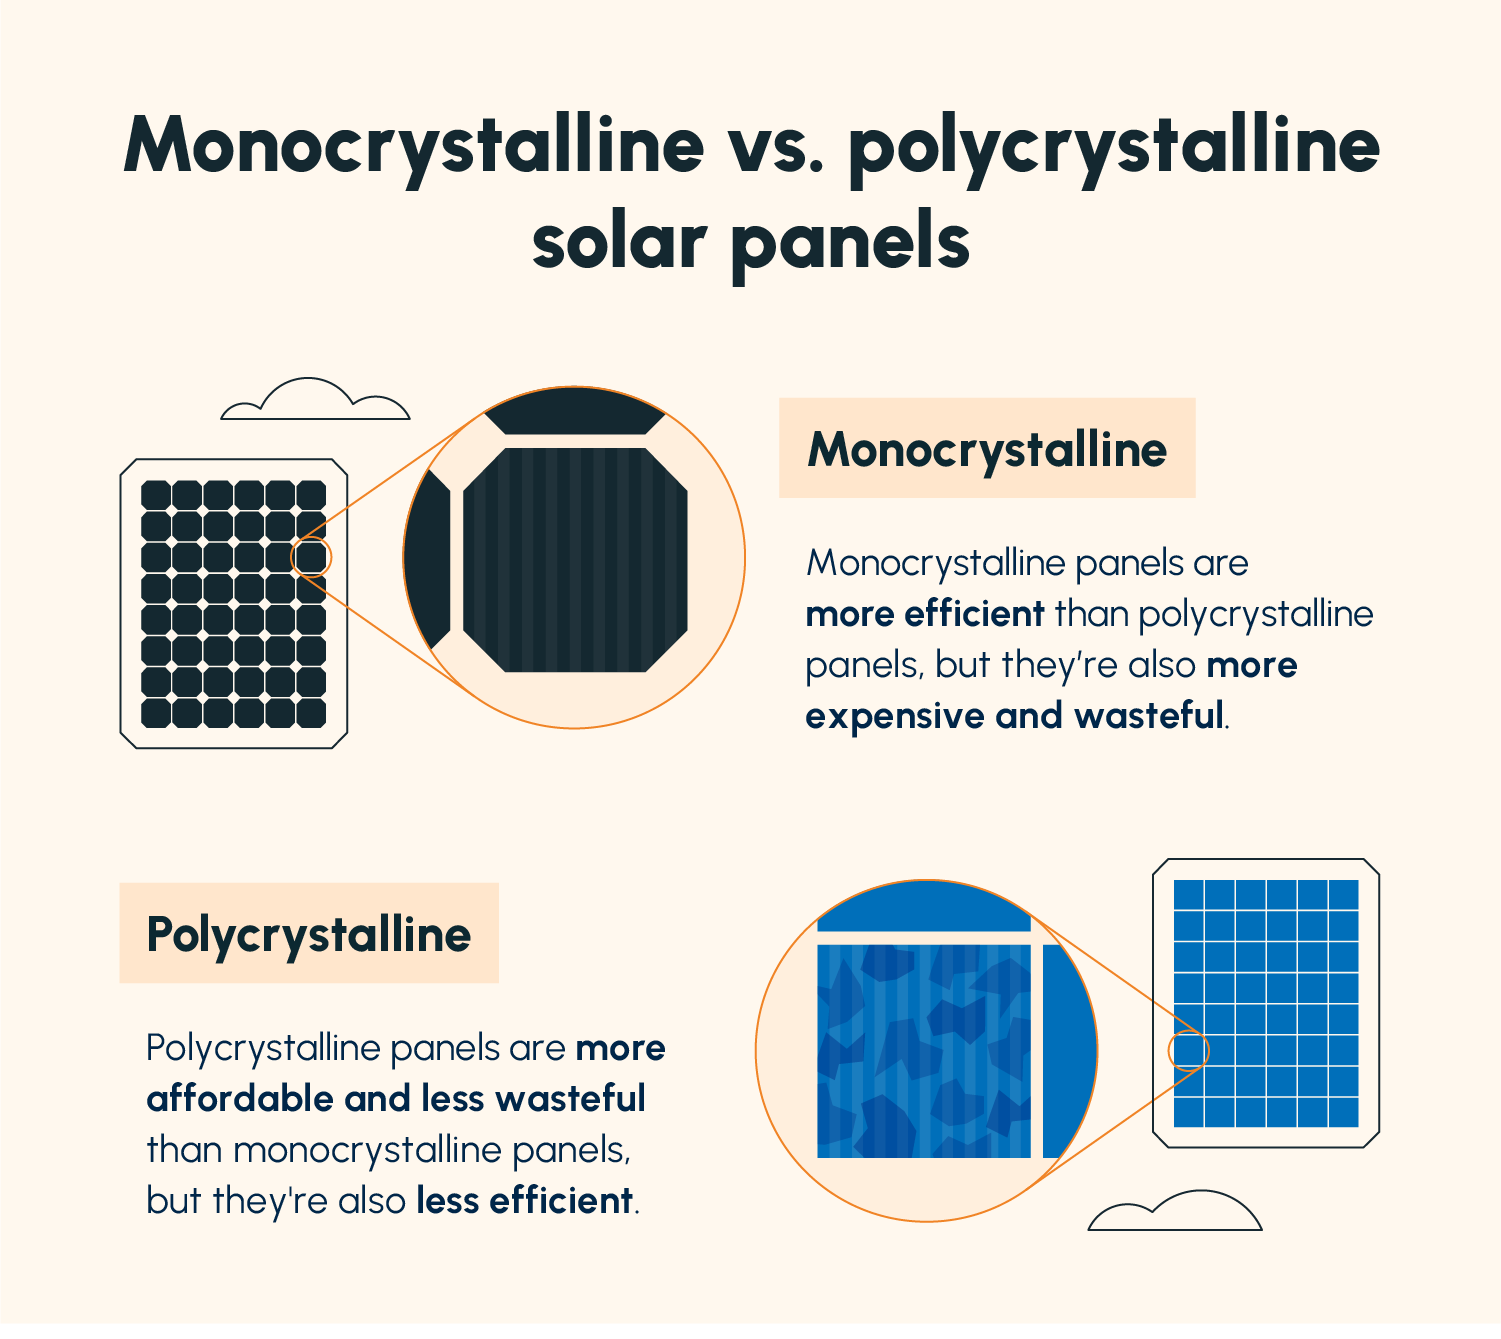  An illustrated comparison of monocrystalline vs. polycrystalline solar panels